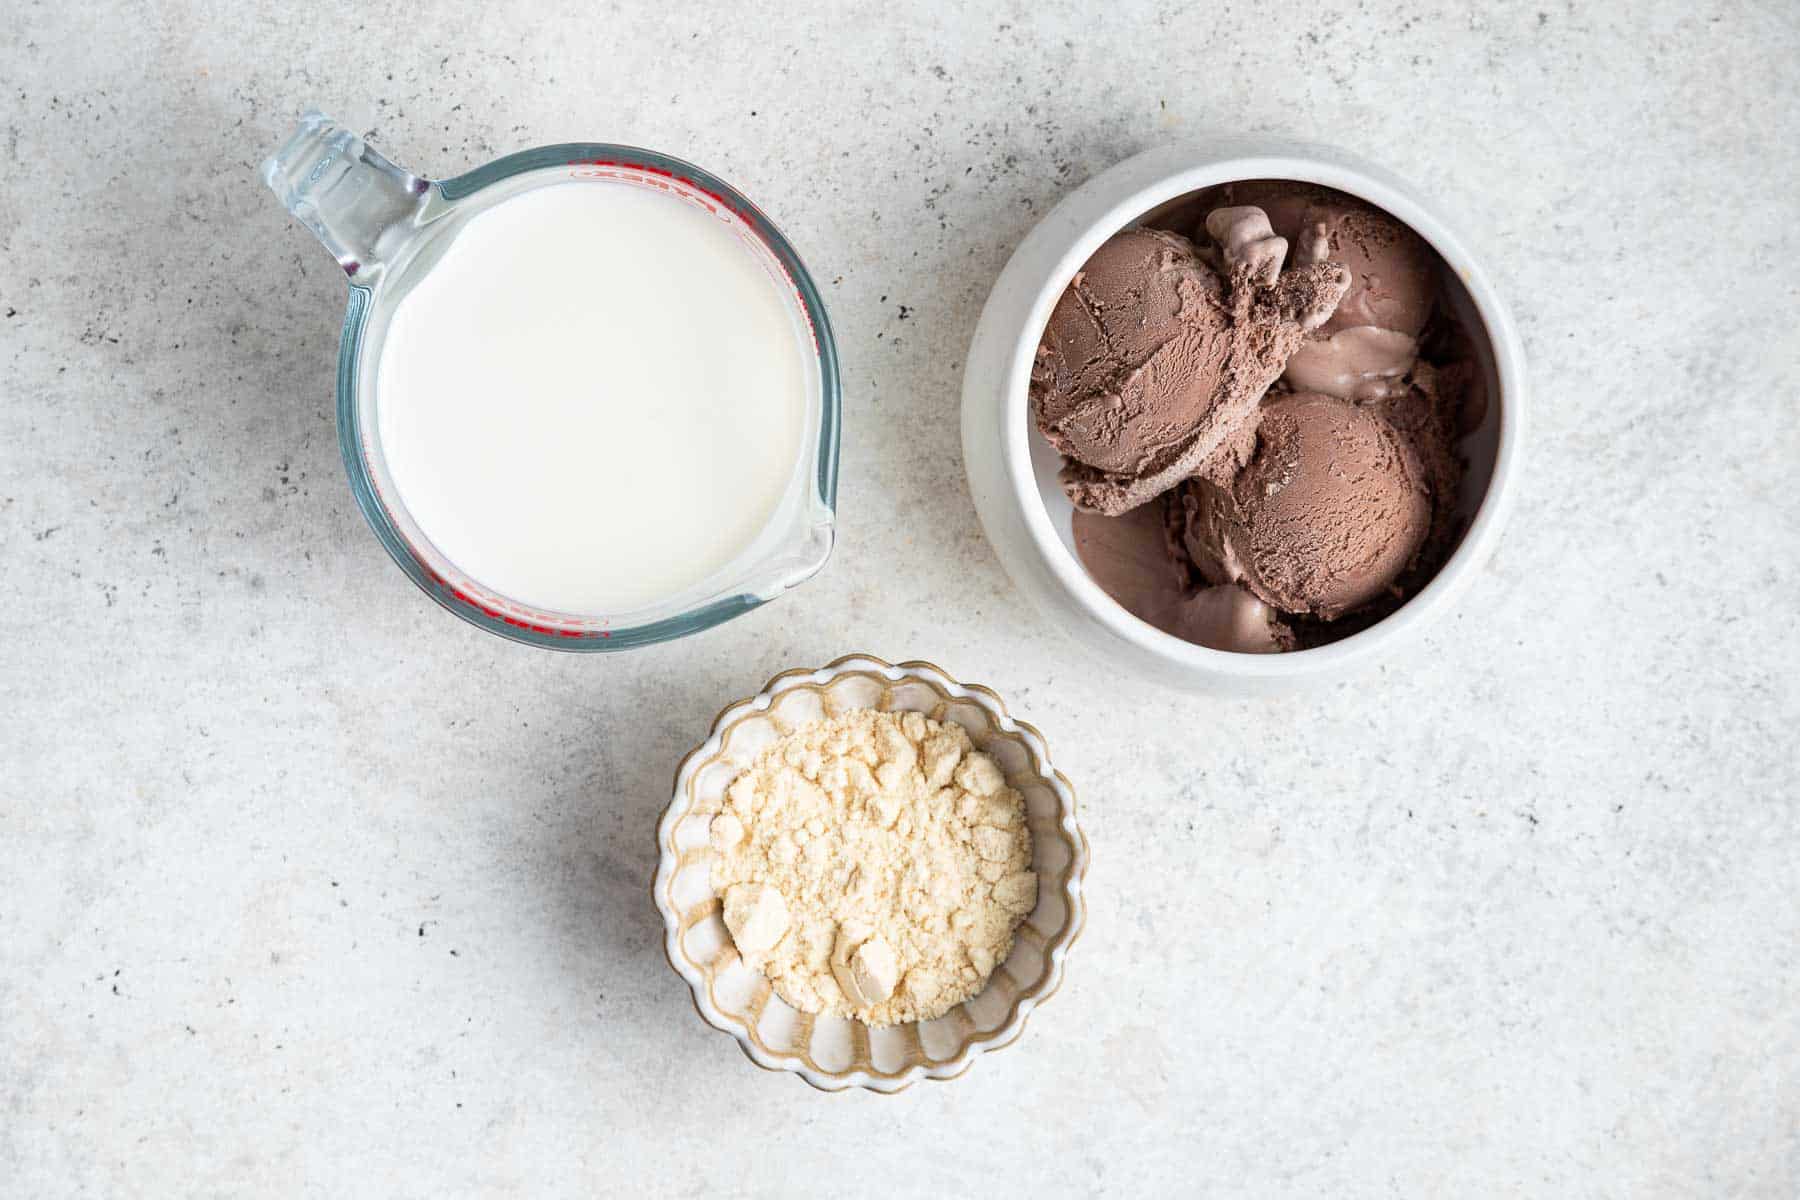 Three bowls with chocolate ice cream, milk, and milk powder on grey counter.